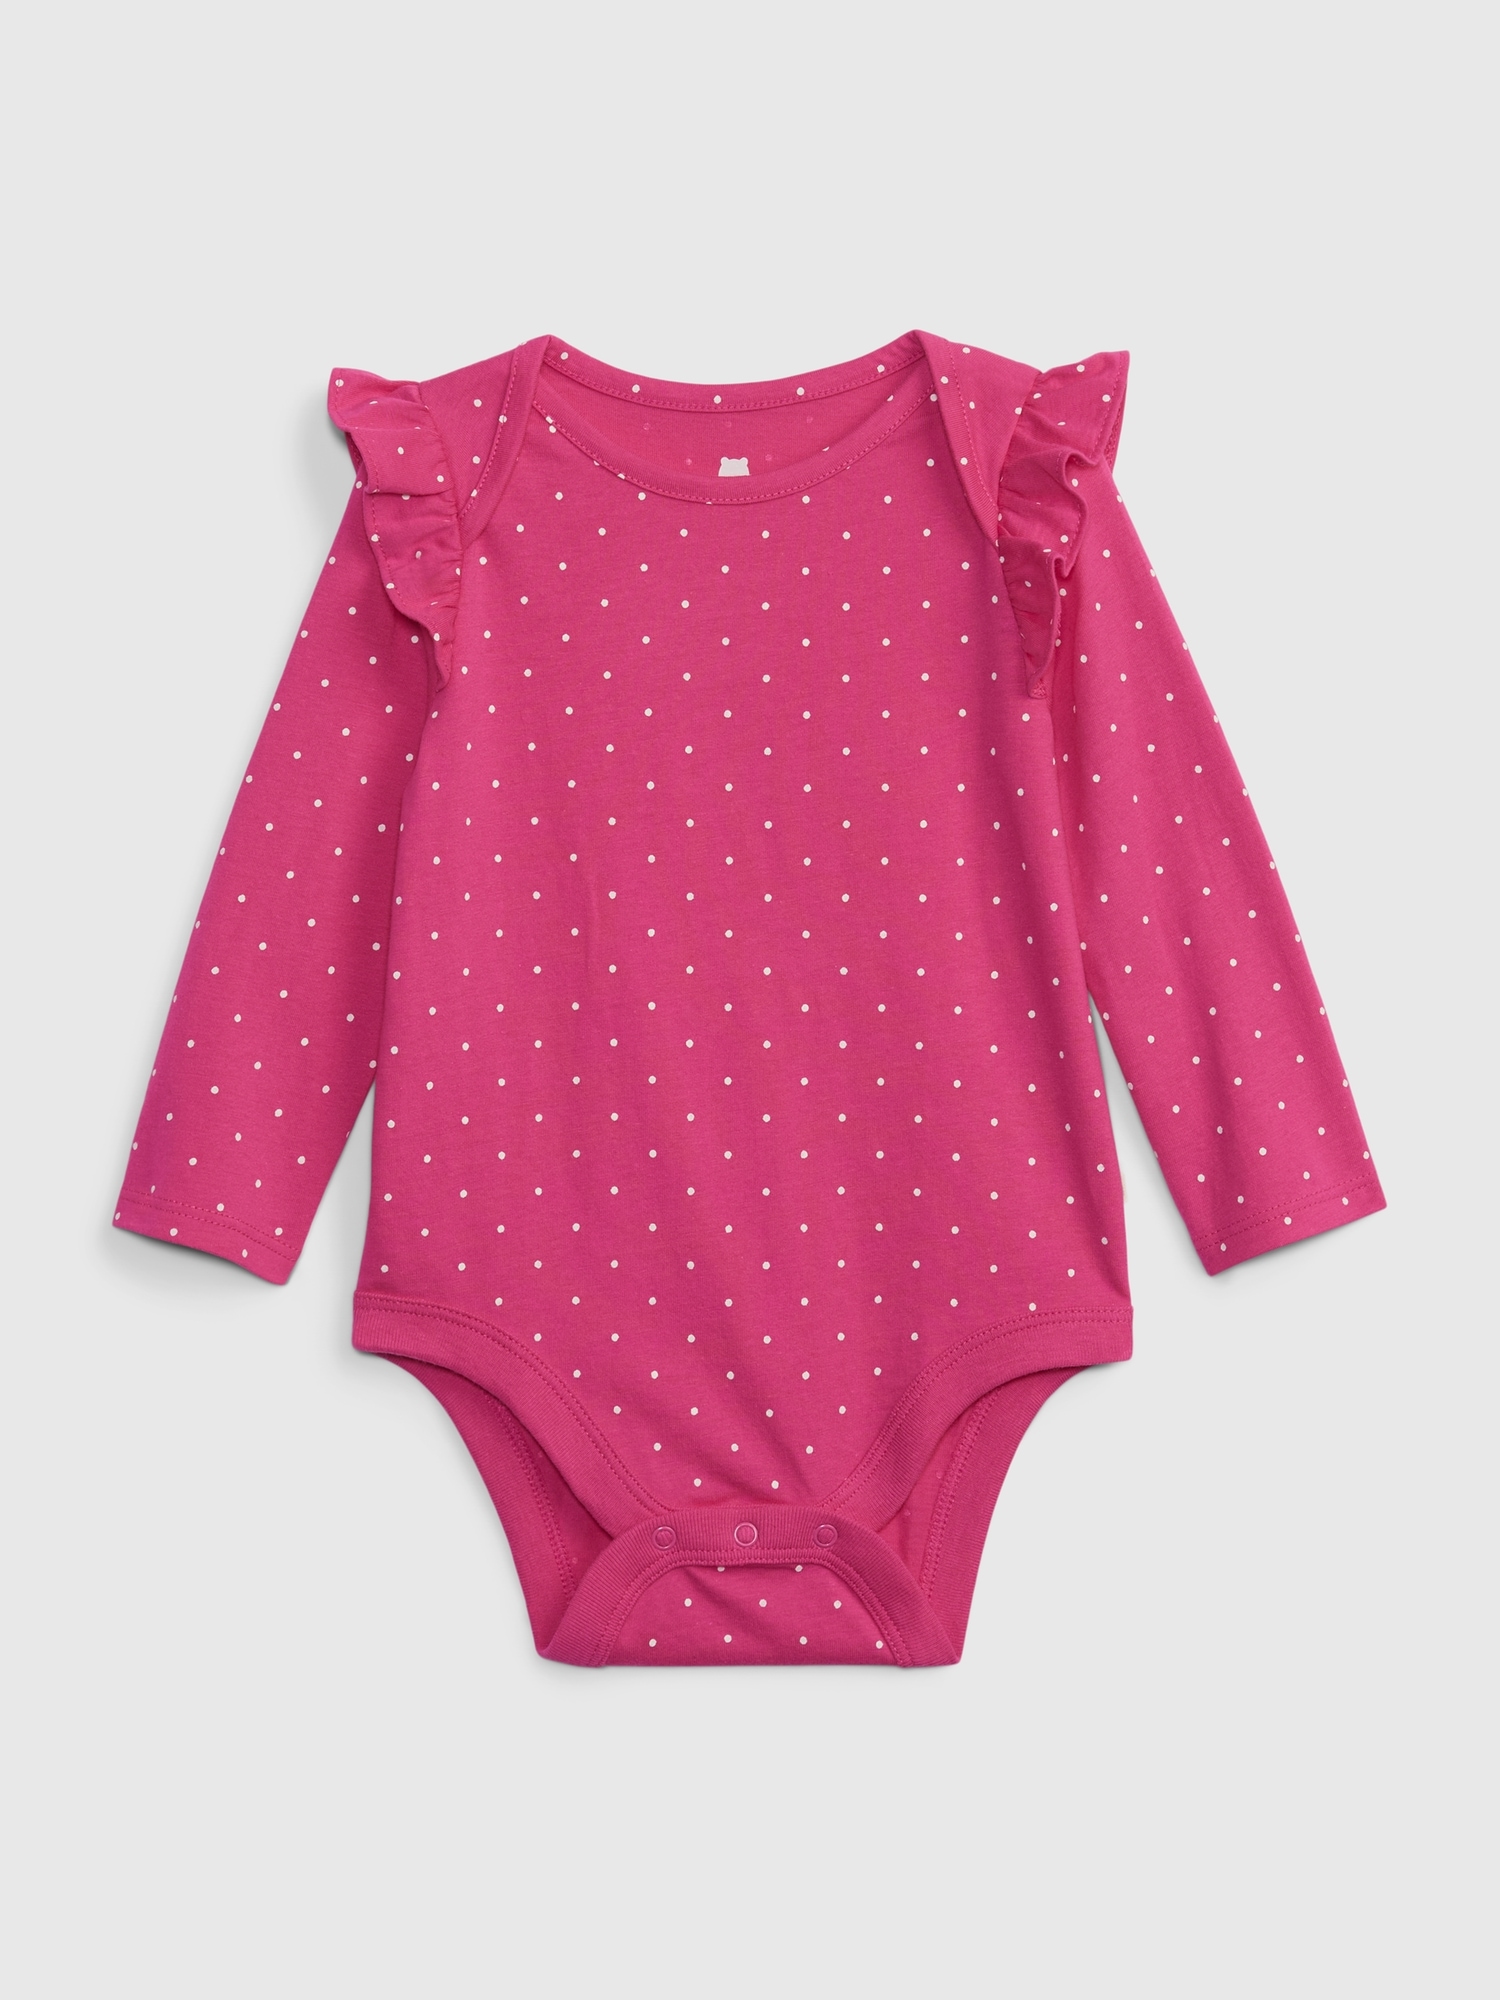 Baby 100% Organic Cotton Mix and Match Print Bodysuit | Gap